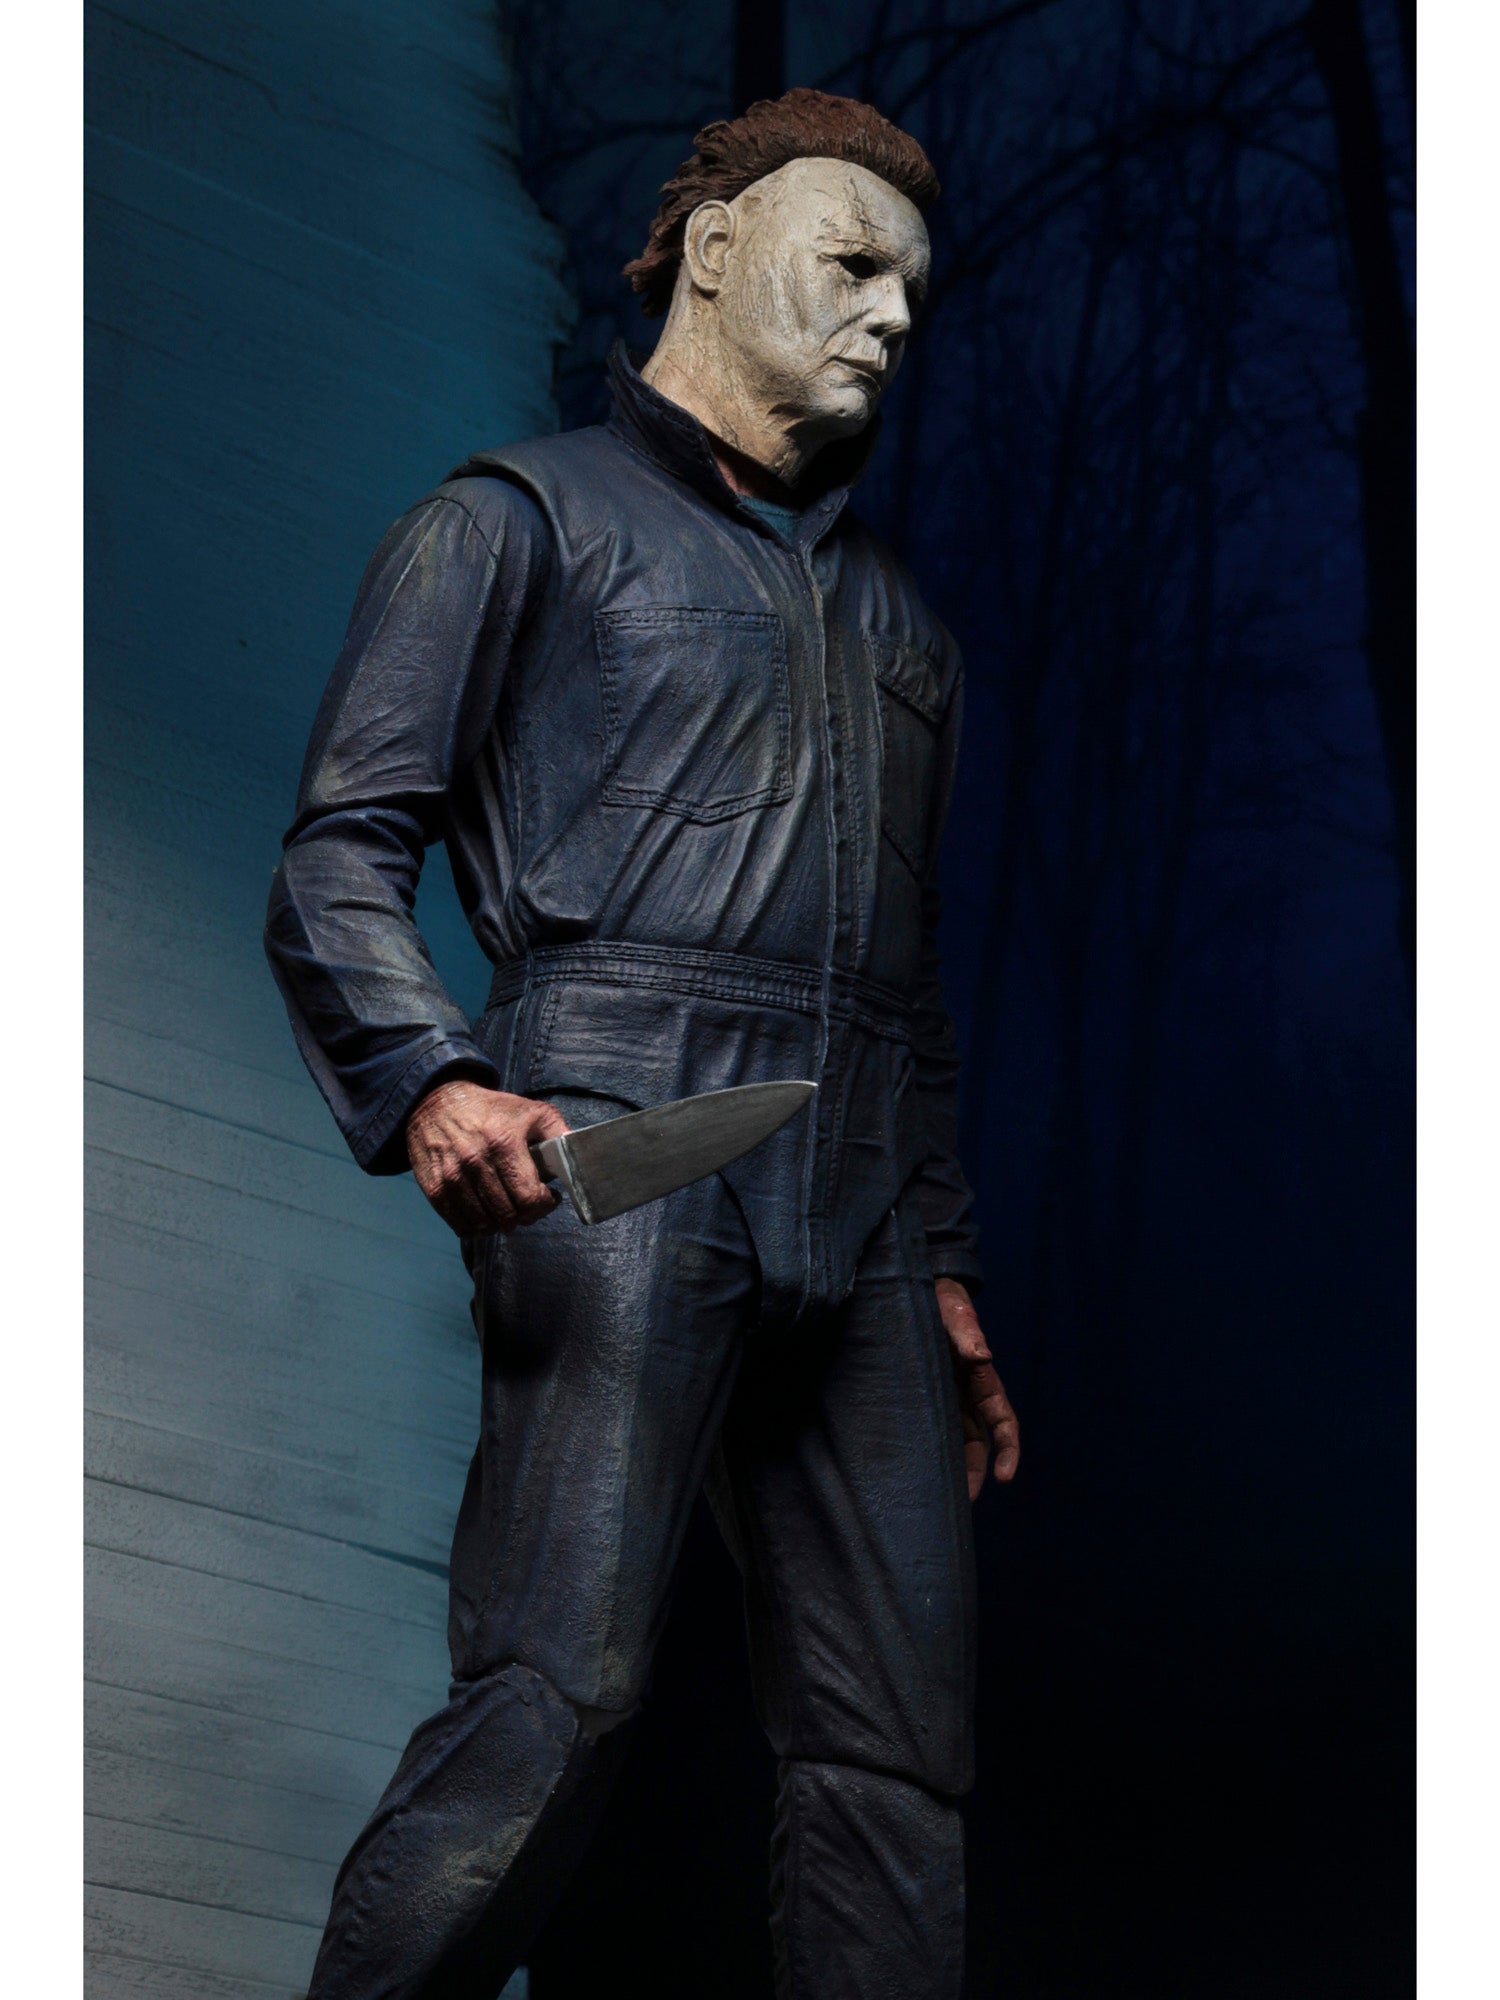 NECA - Halloween (2018) - 7" Action Figure - Ultimate Michael Myers - costumes.com